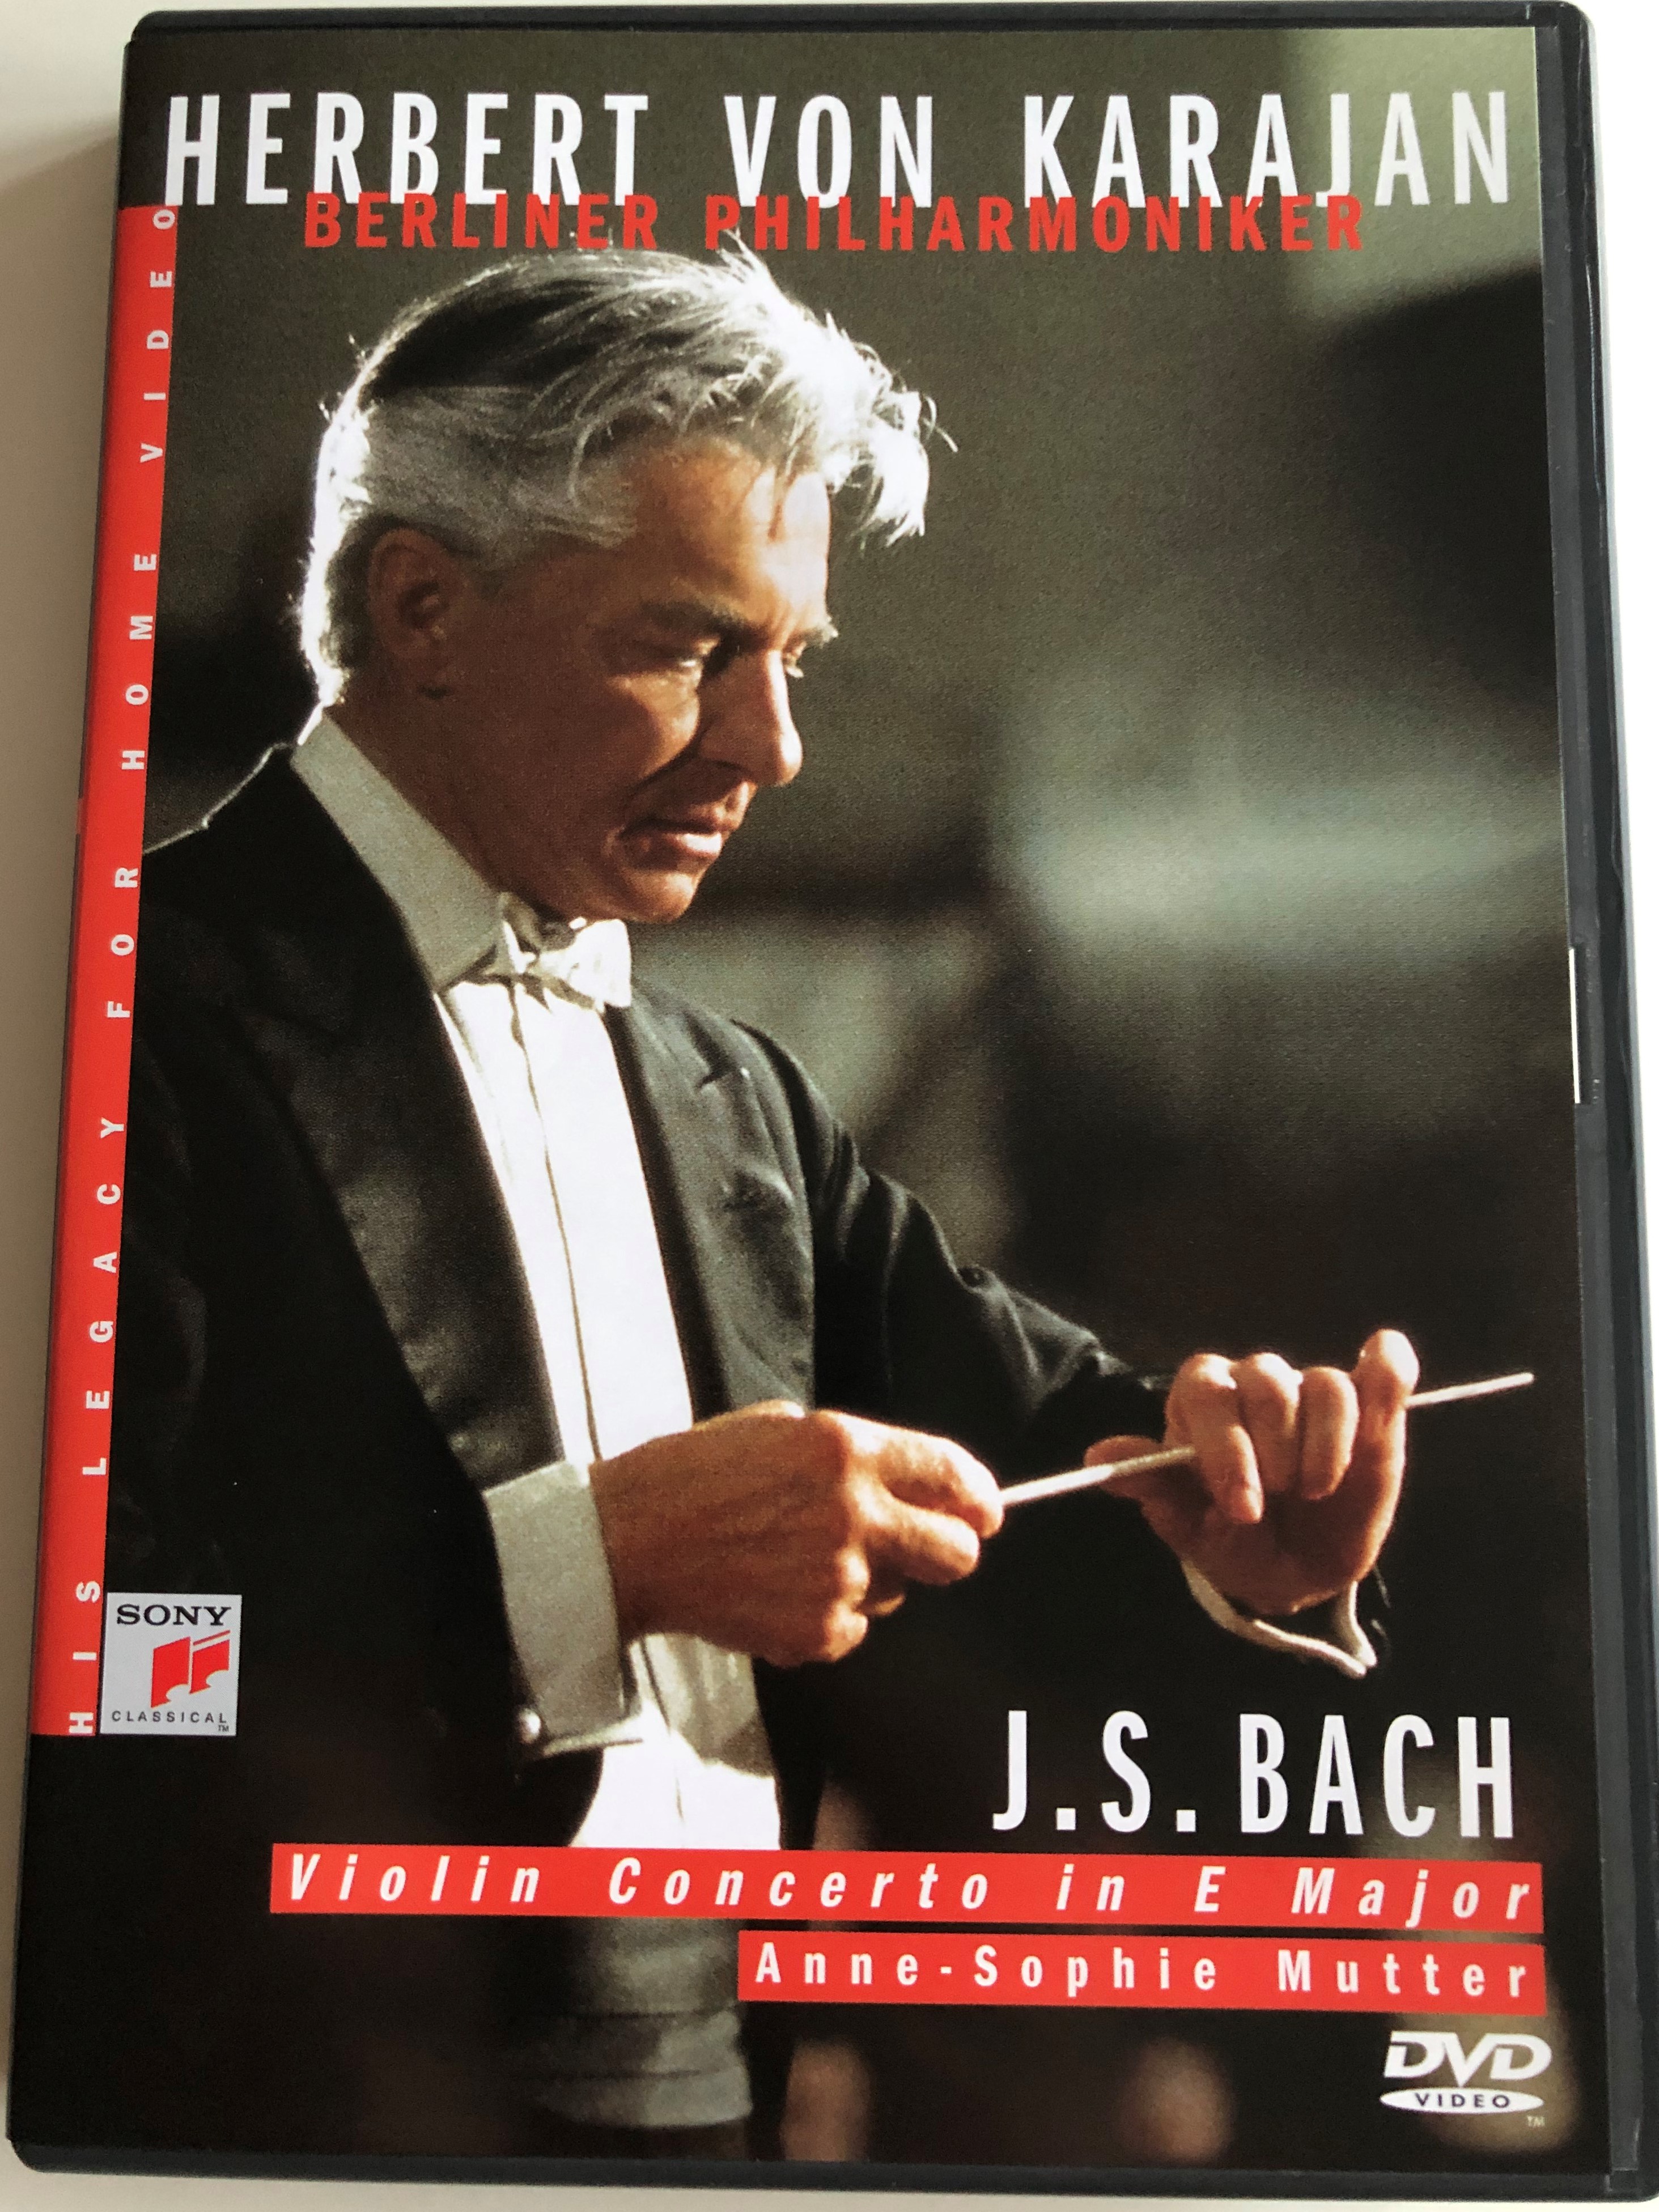 herbert-von-karajan-j.-s.-bach-dvd-violin-concerto-in-e-major-directed-by-humphrey-burton-1.jpg